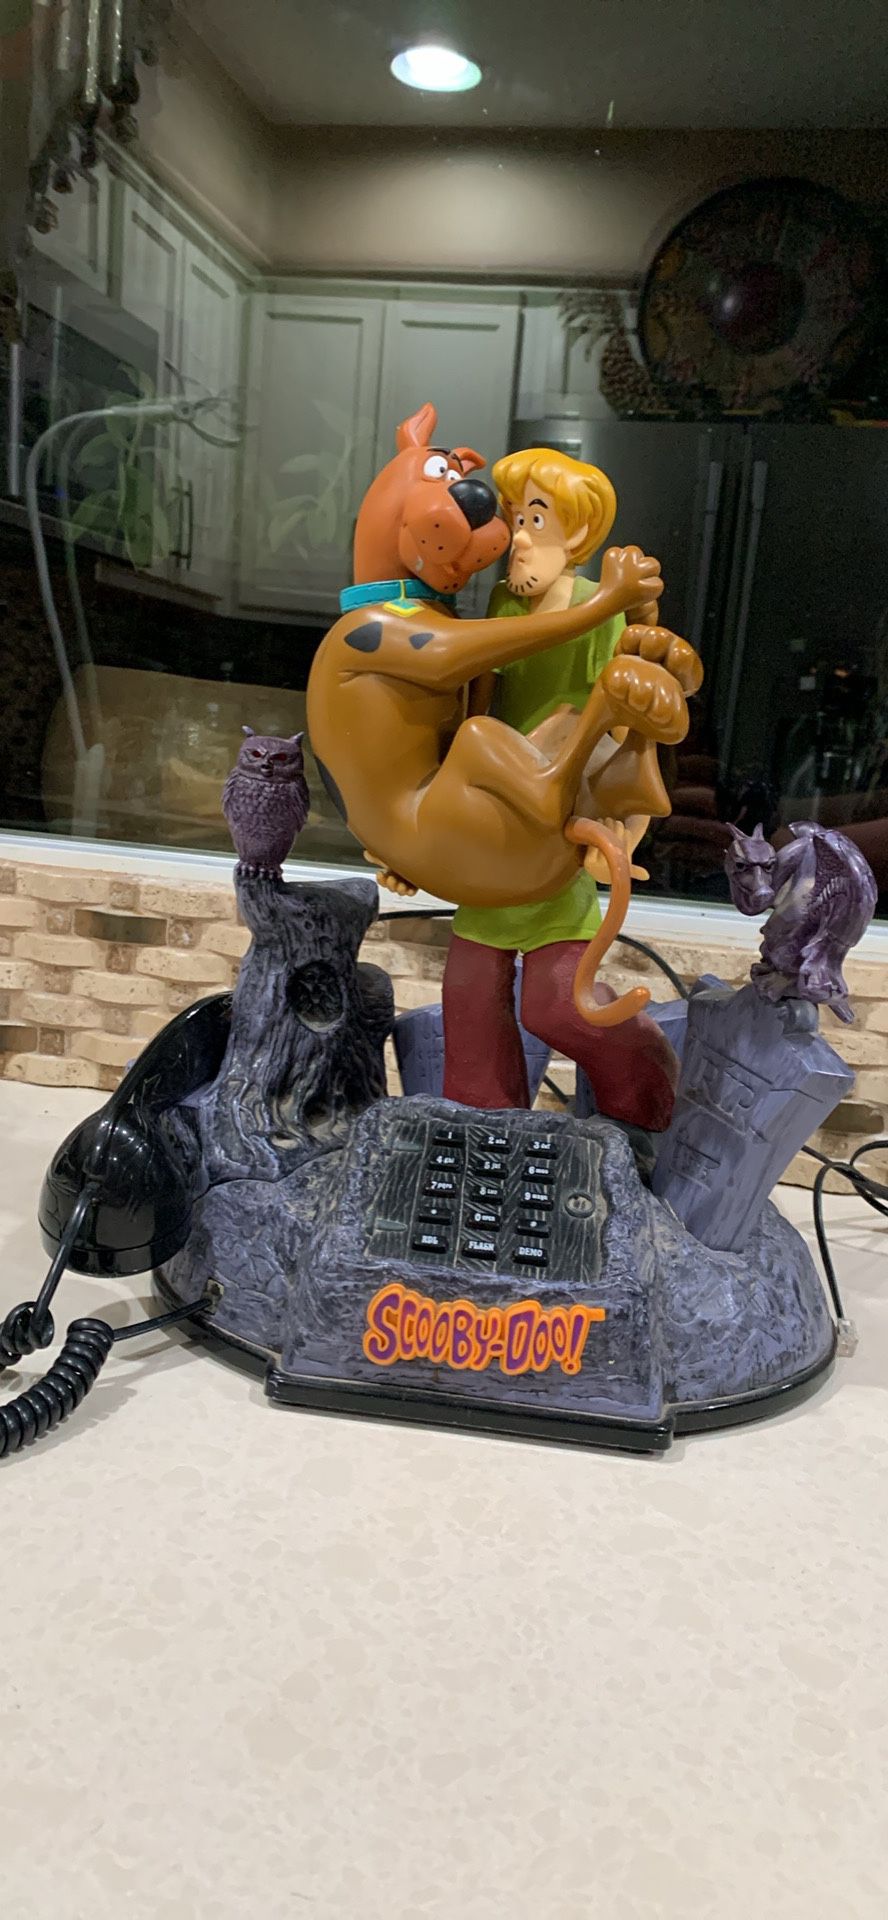 Collectors Scooby Doo Telephone